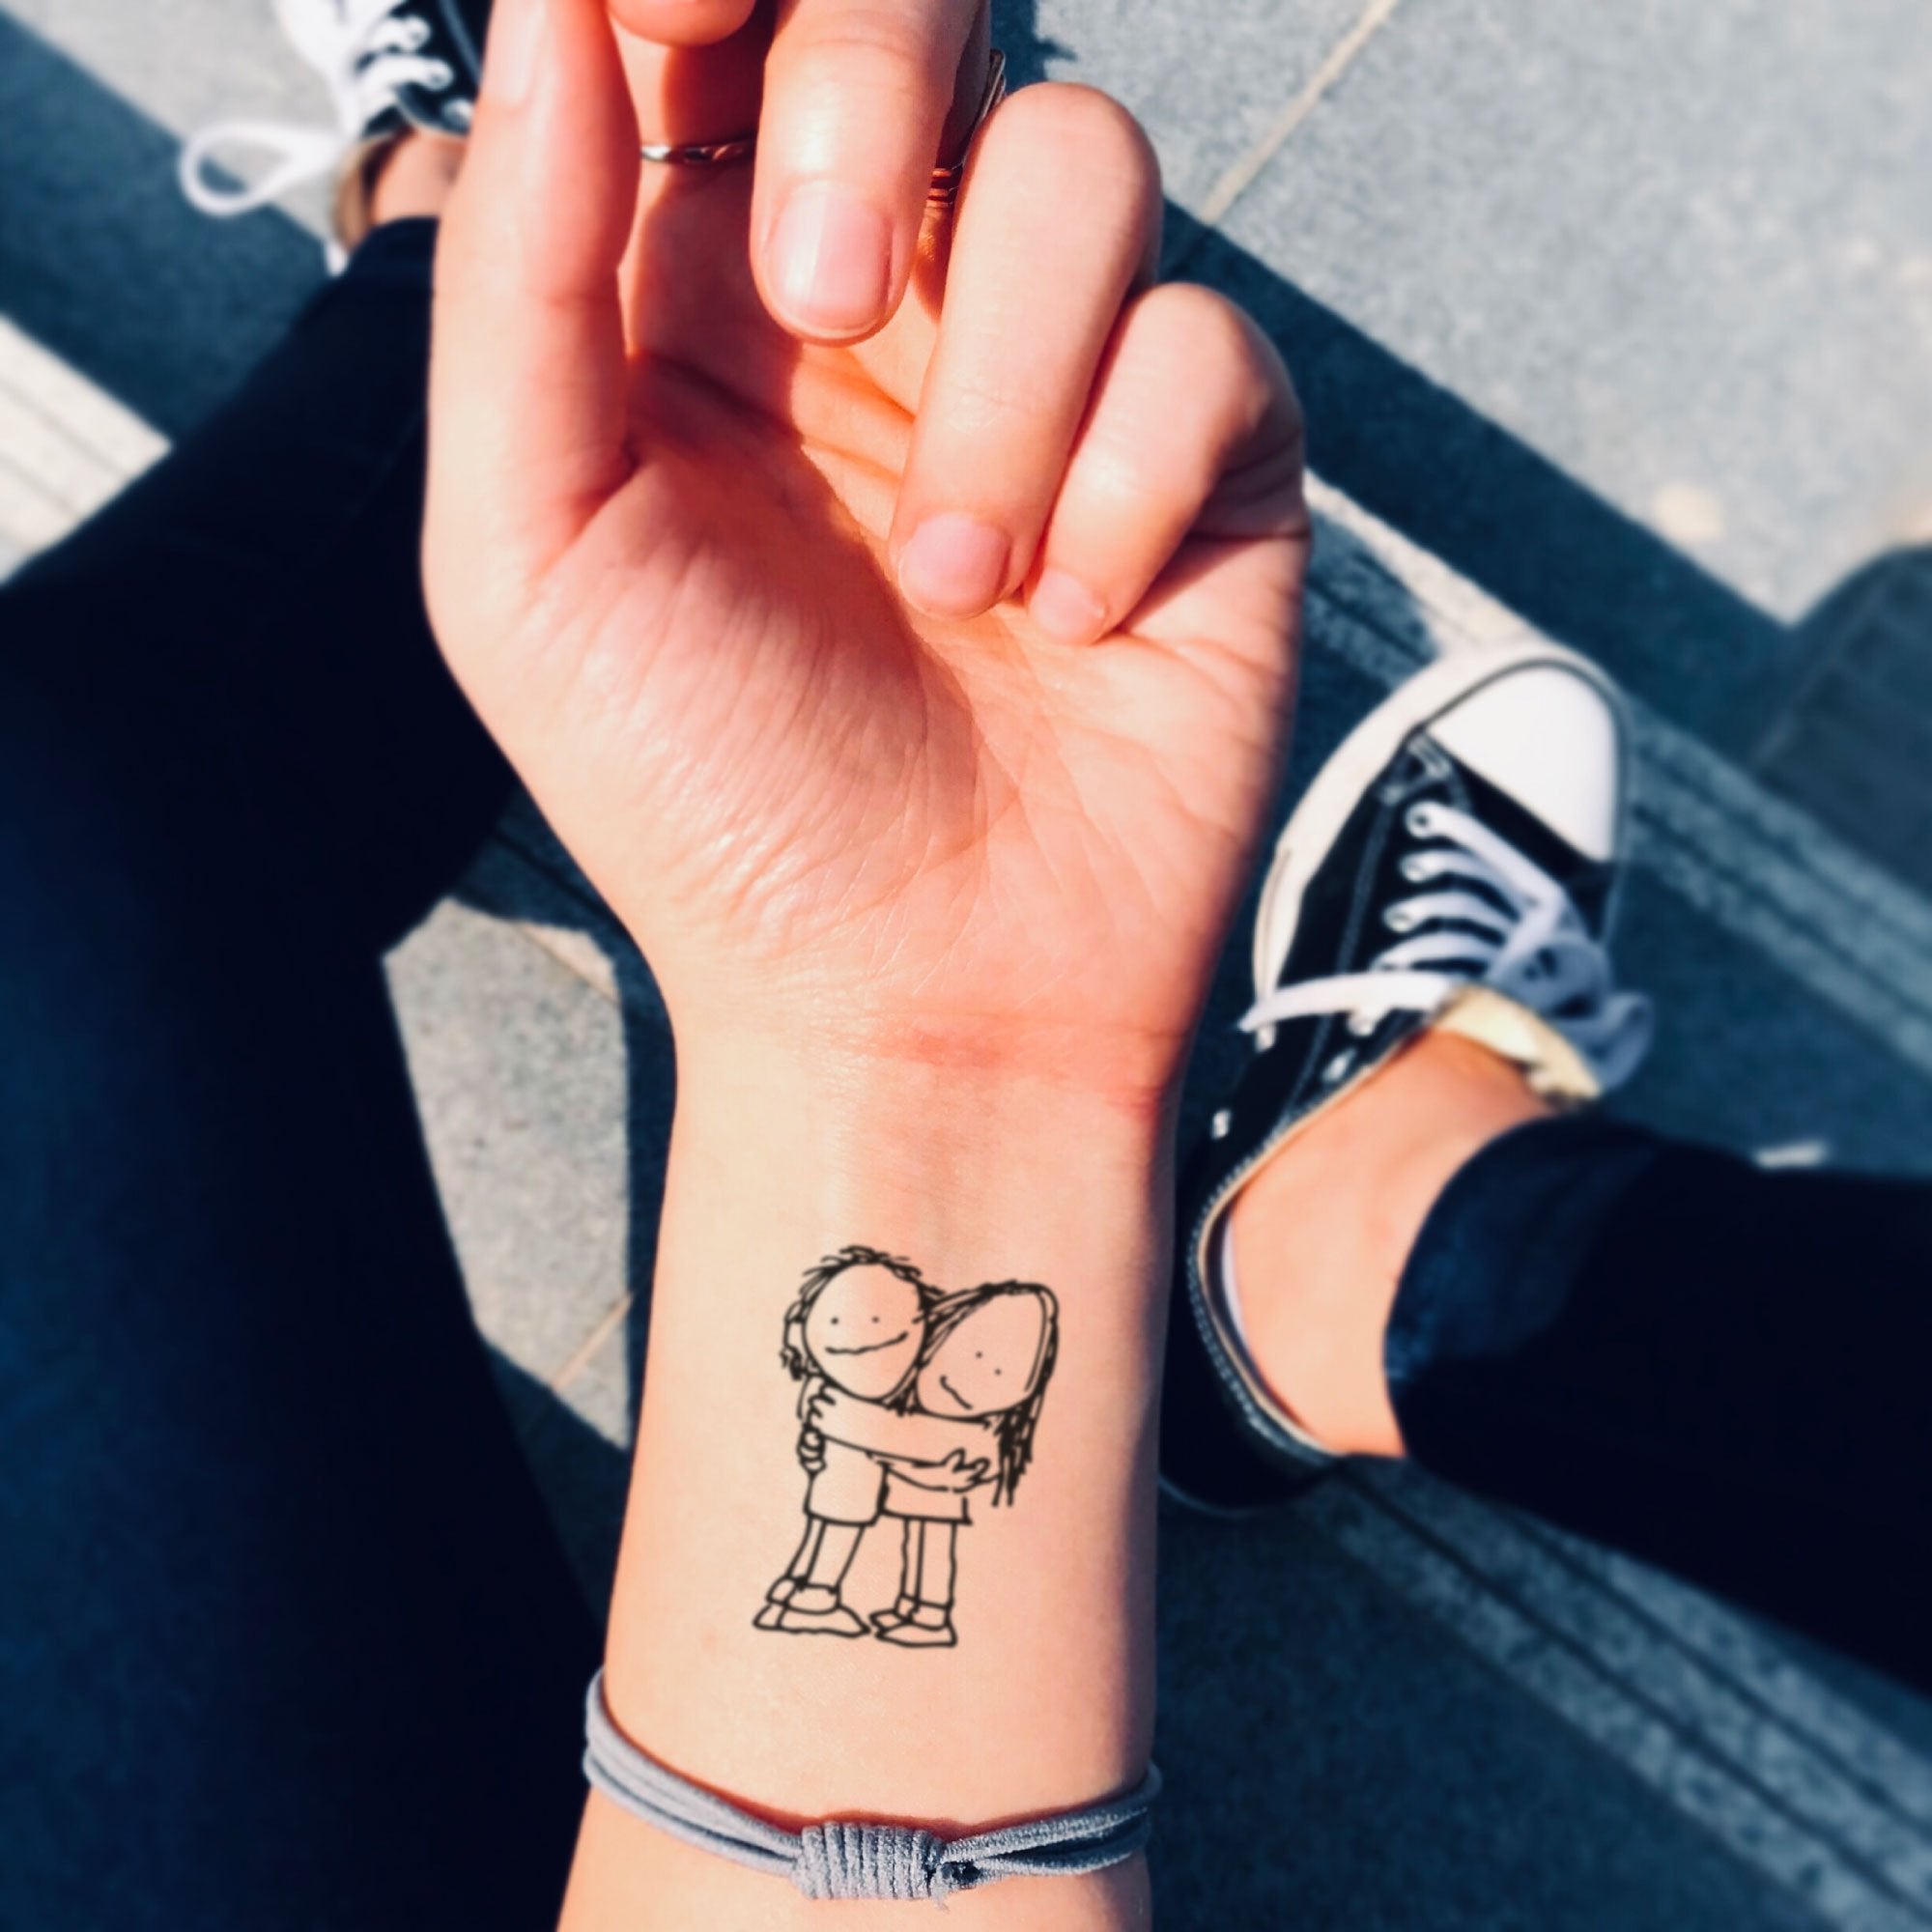 Small Shel Silverstein Illustrative Temporary Tattoo Sticker Design Idea Wrist